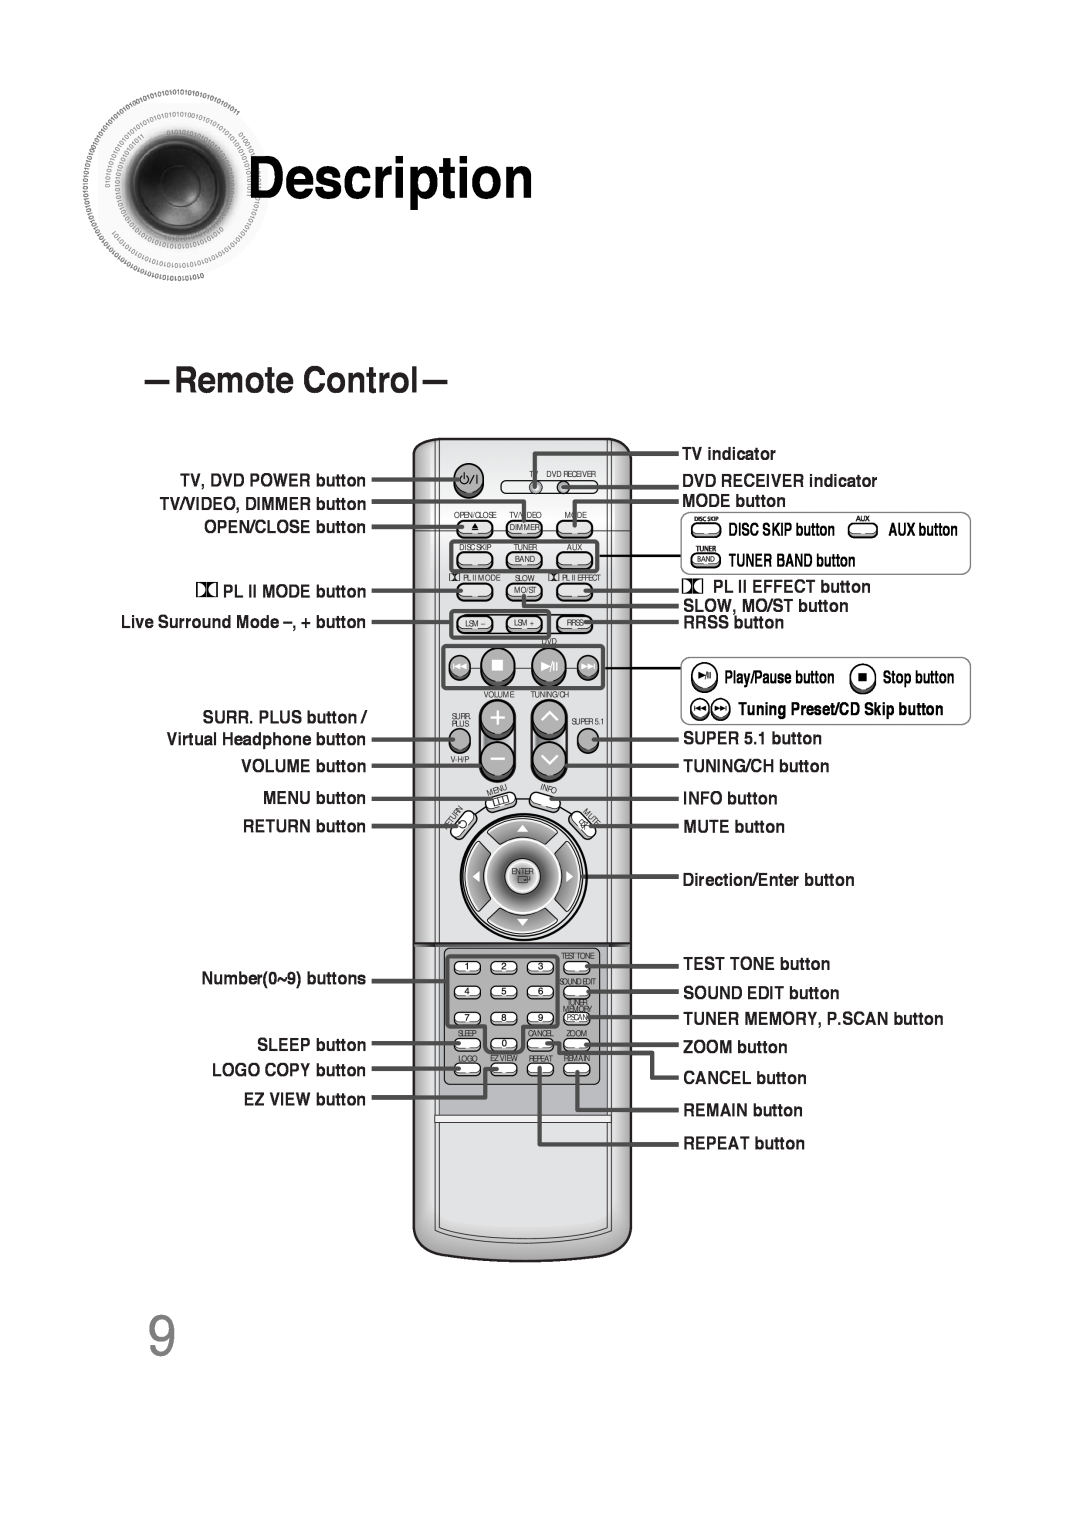 Samsung 20051111103302296 Description, RemoteControl, TV indicator, DVD RECEIVER indicator MODE button, SLEEP button 